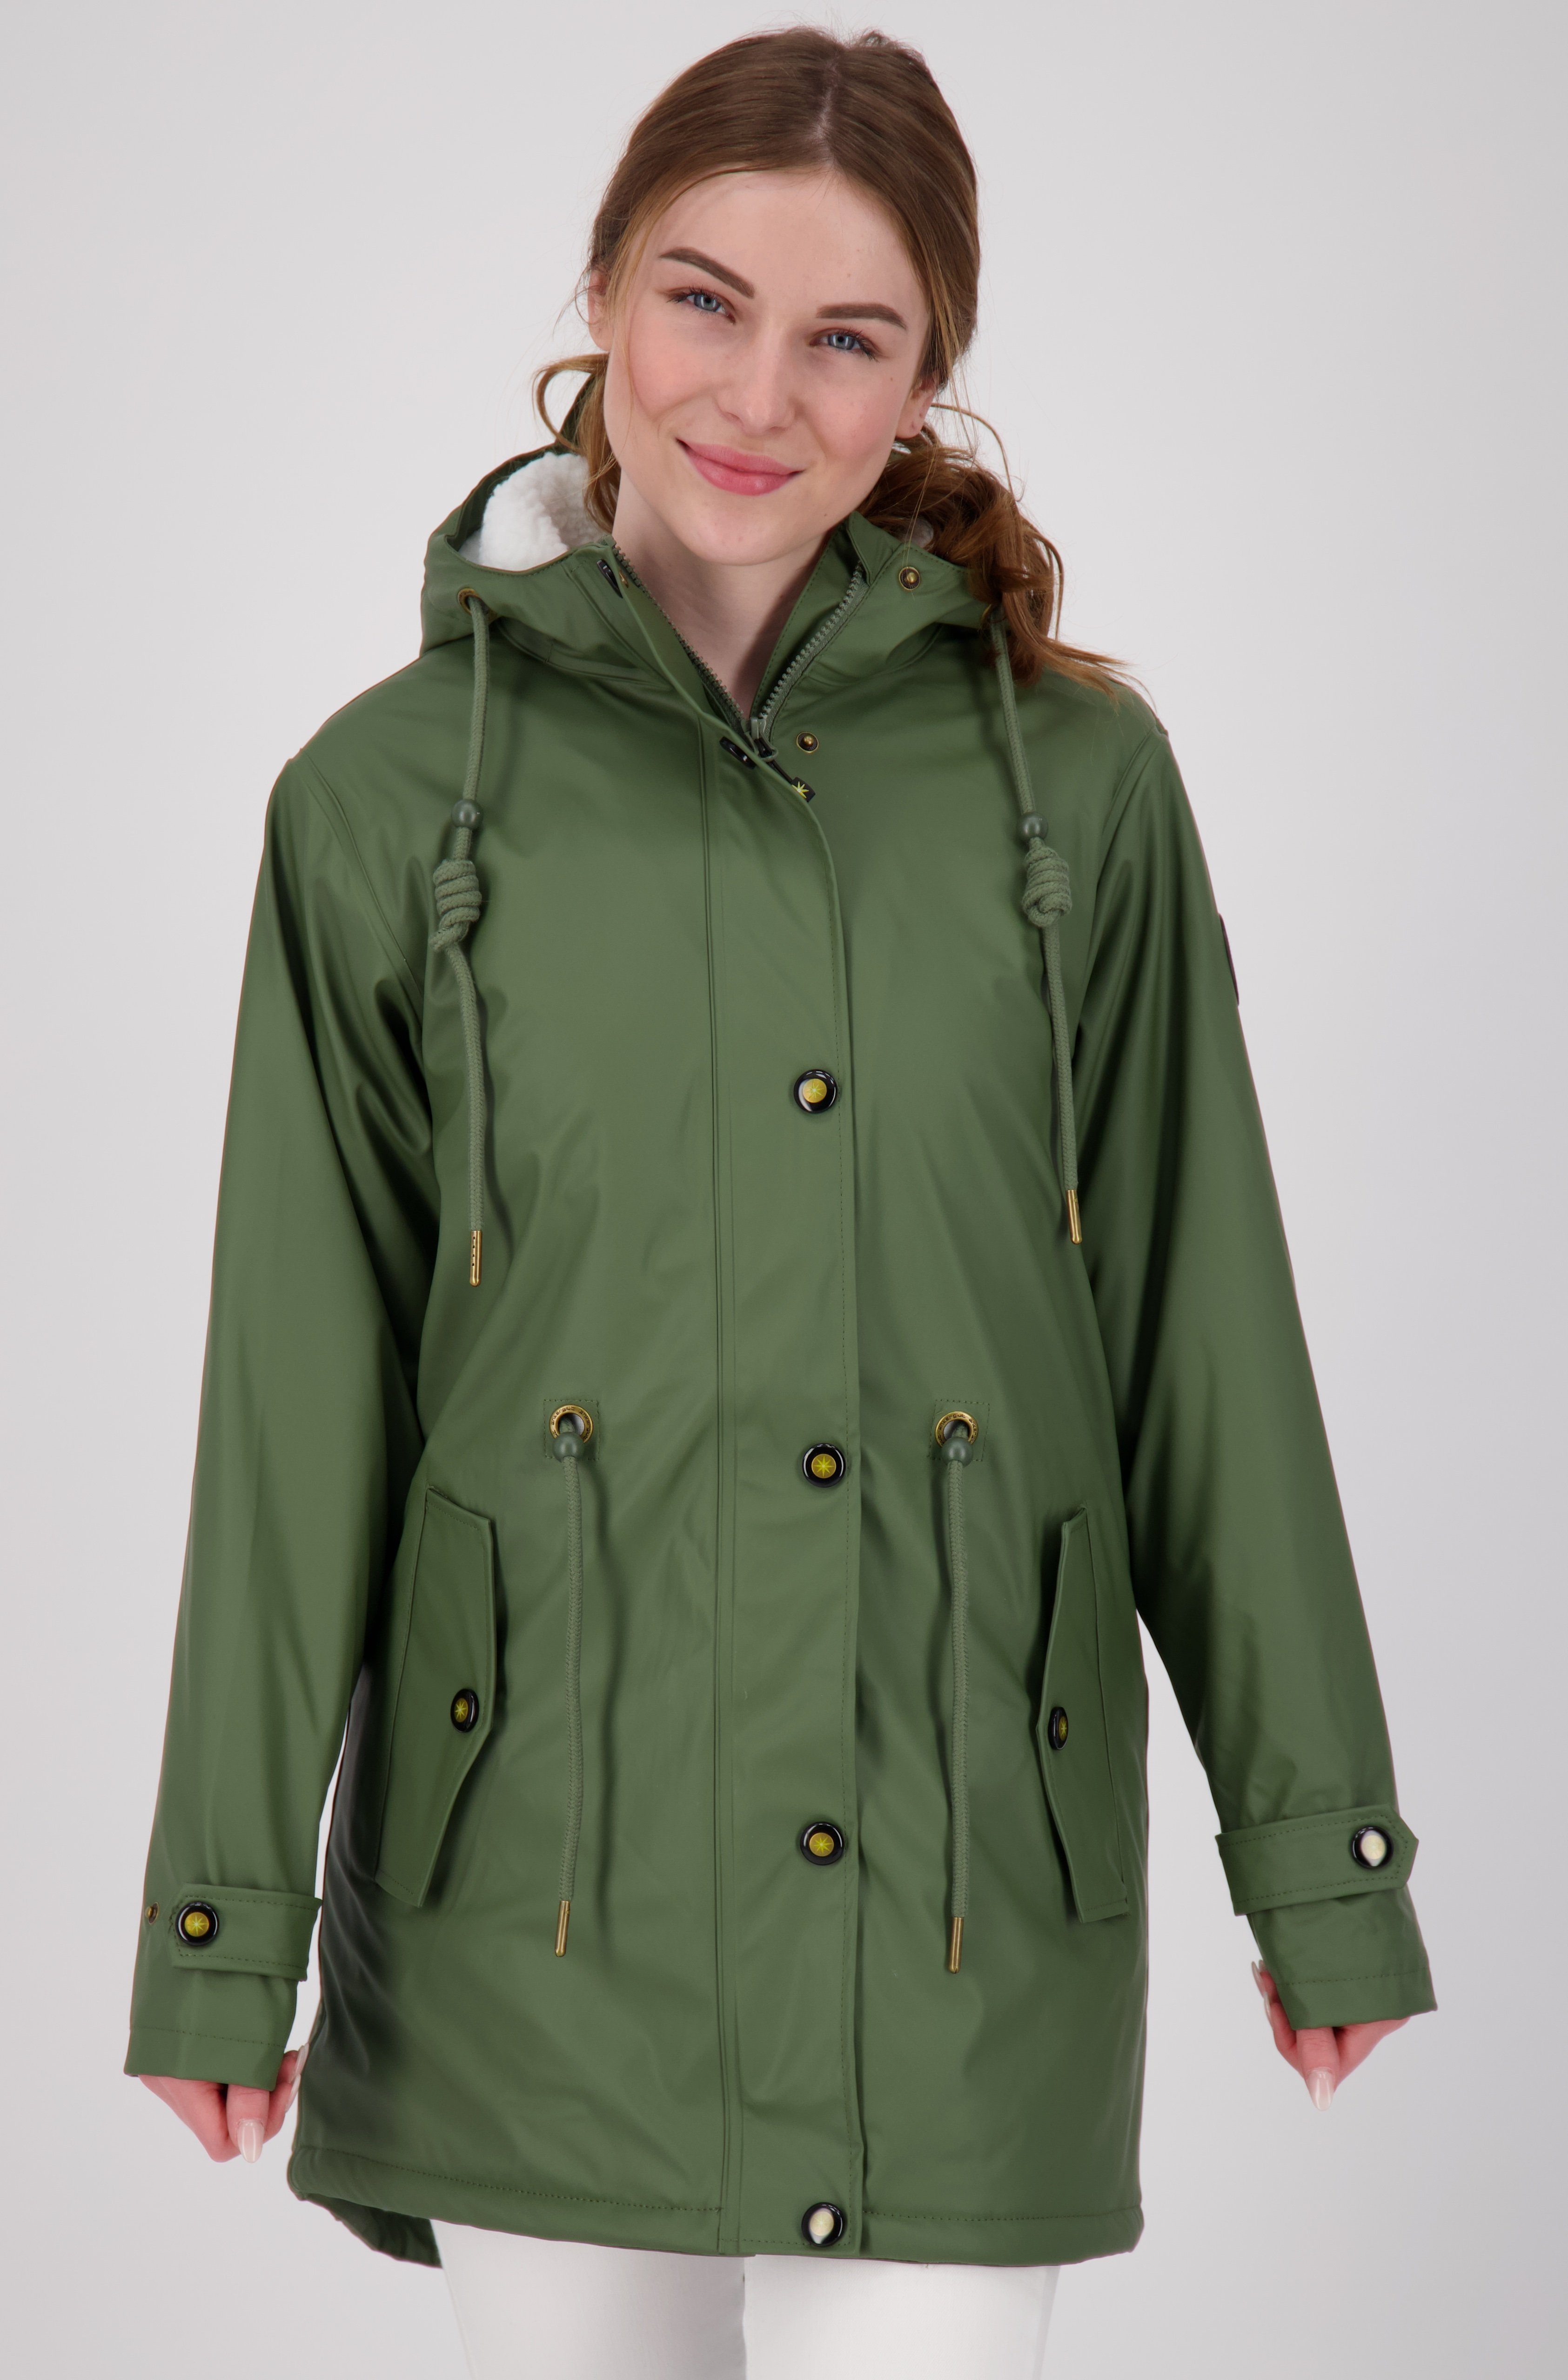 DEPROC Active Regenjacke Regenjacke #ankergluttraum CS erhältlich & in olive Großen WOMEN NEW auch Größen ANKERGLUT Longjacket